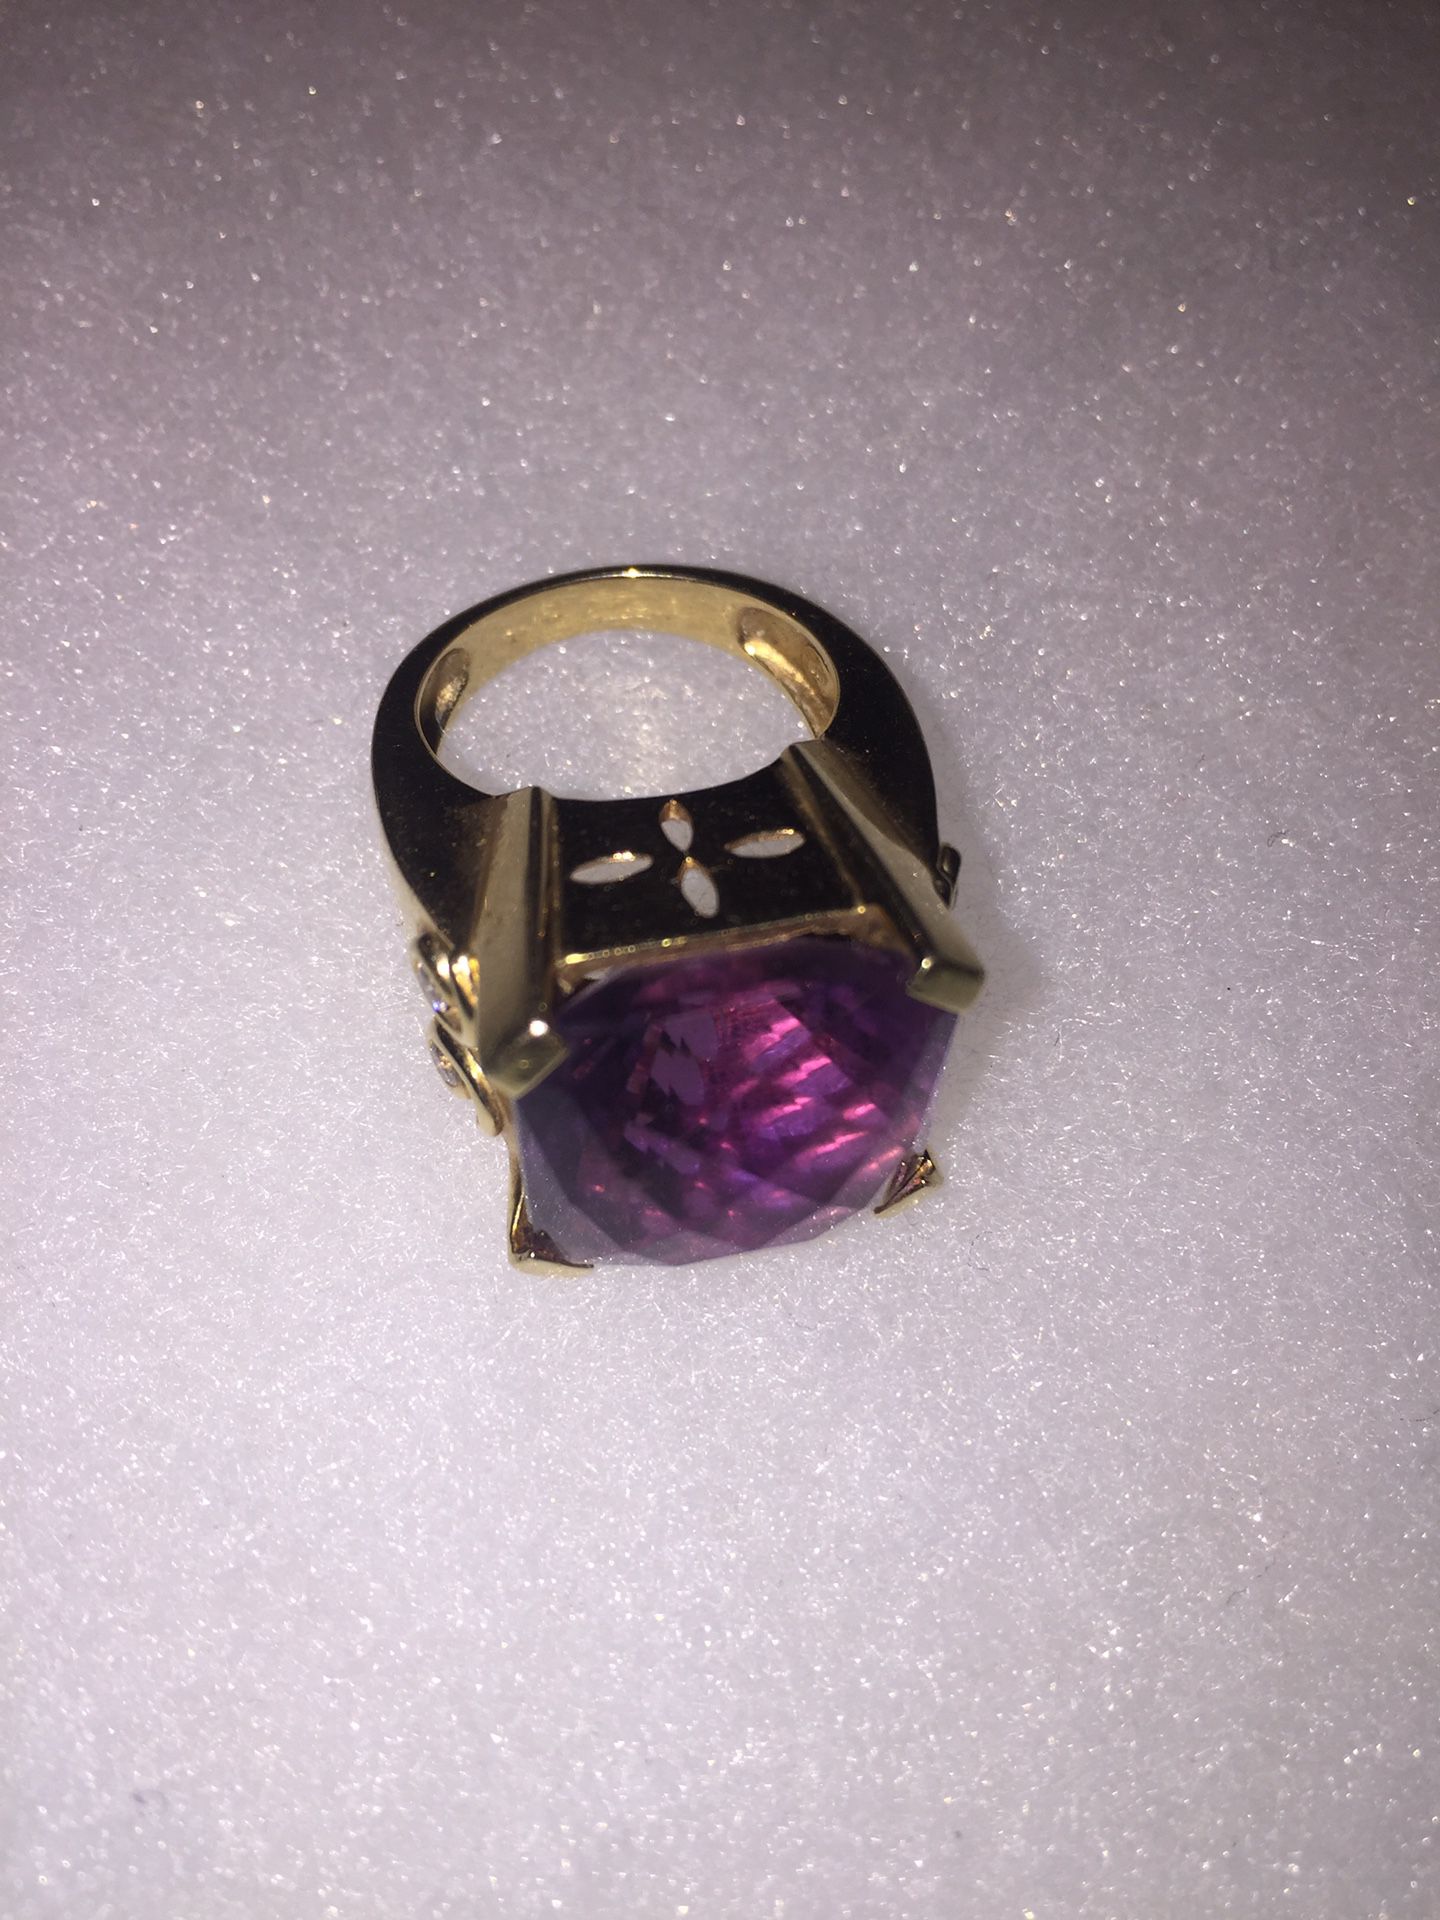 14 karat gold ring with four diamonds and purple amethyst gemstone